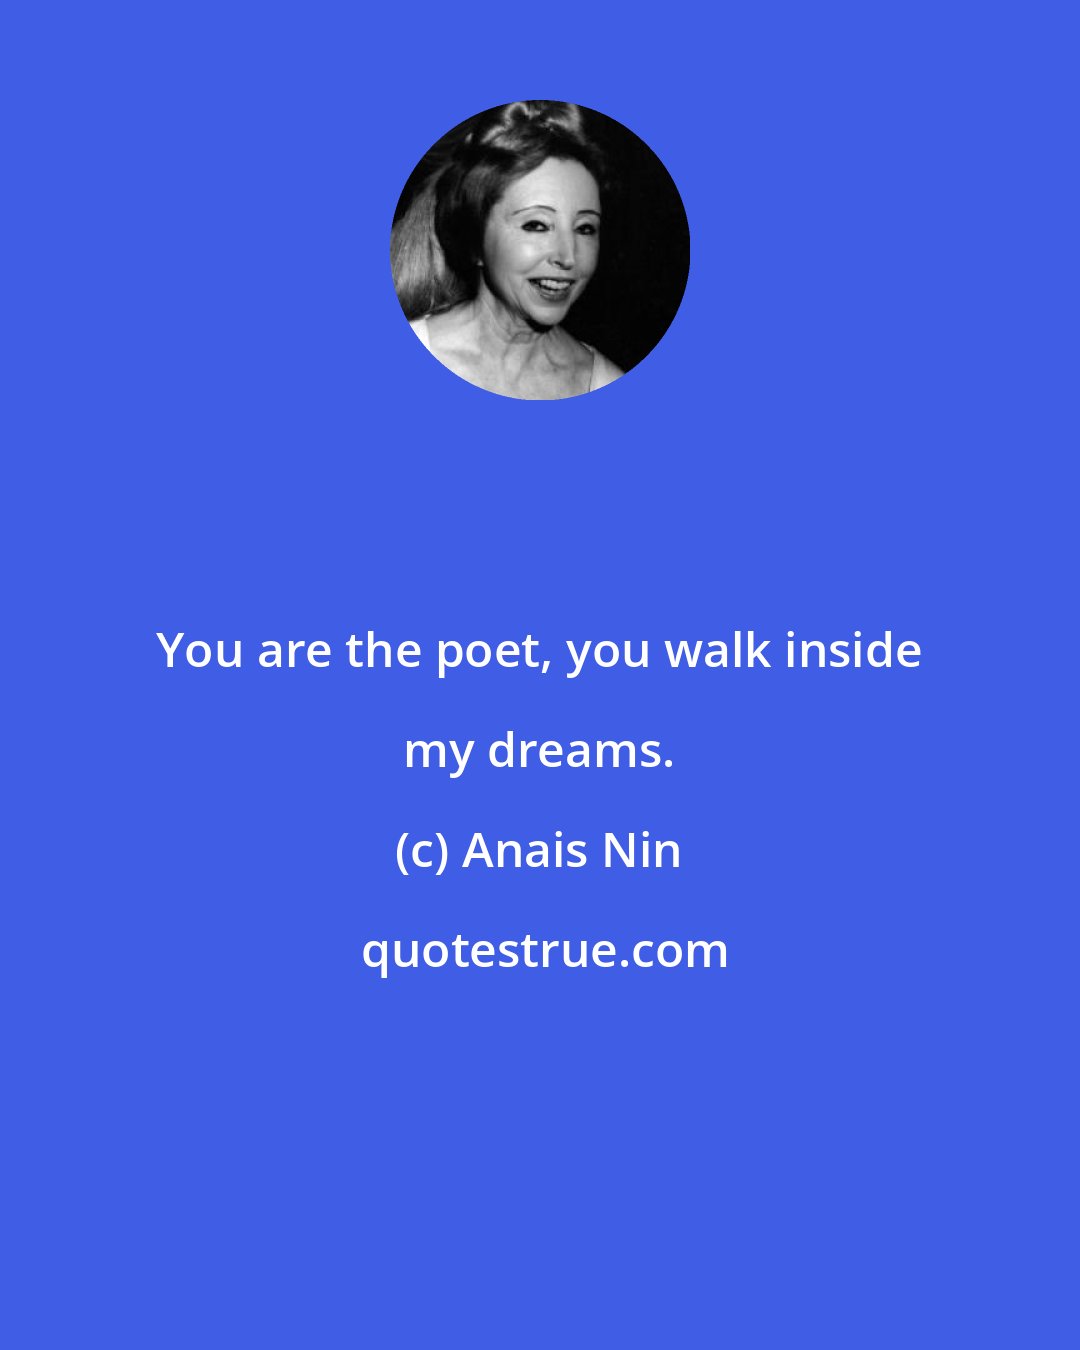 Anais Nin: You are the poet, you walk inside my dreams.